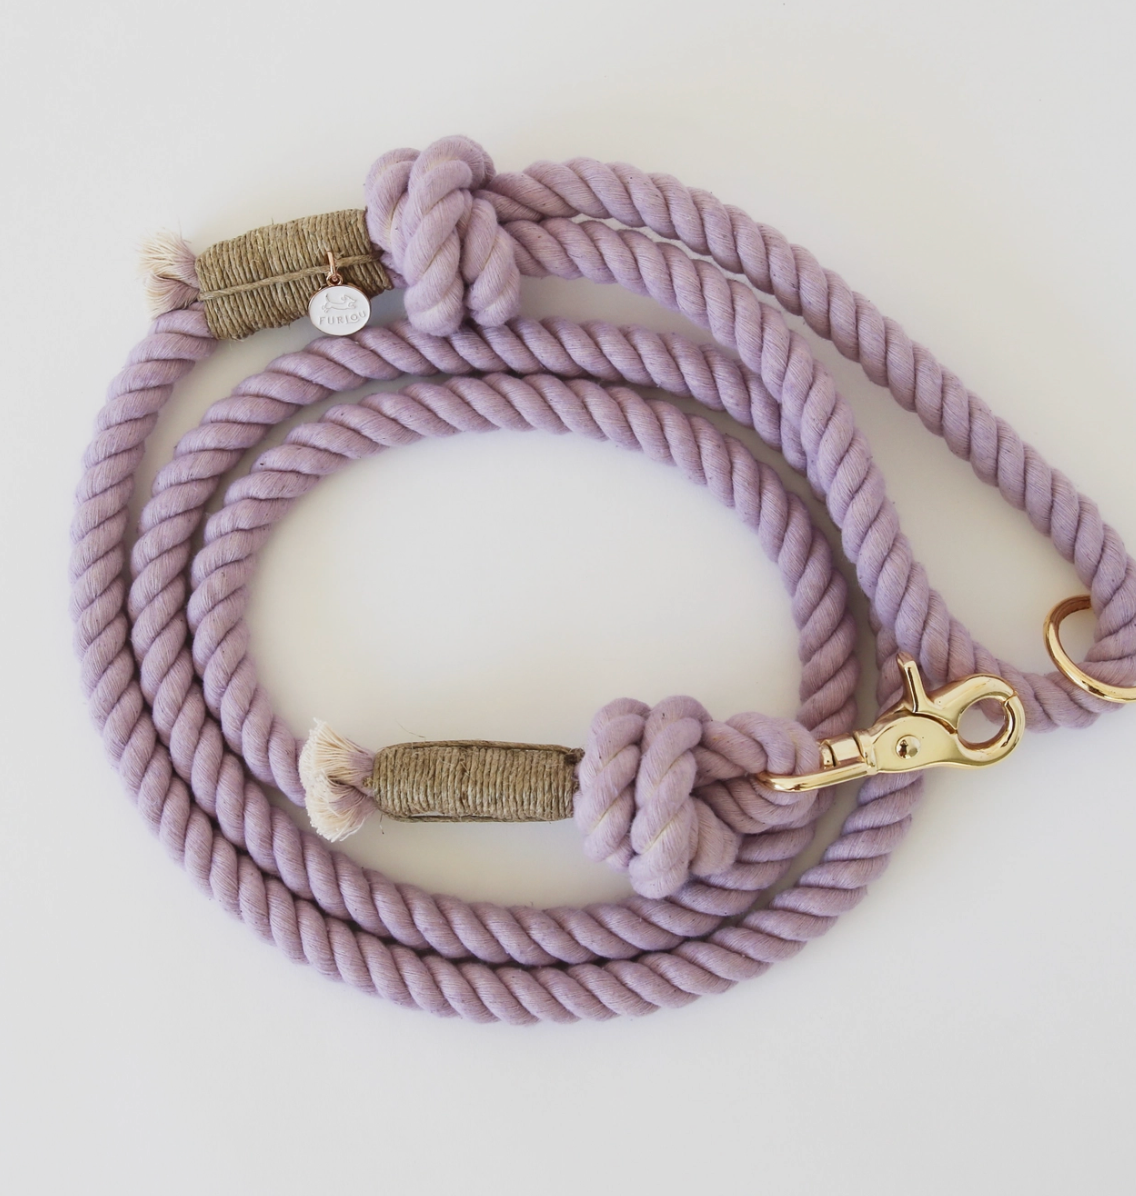 Lavender Fields Cotton Rope Leash